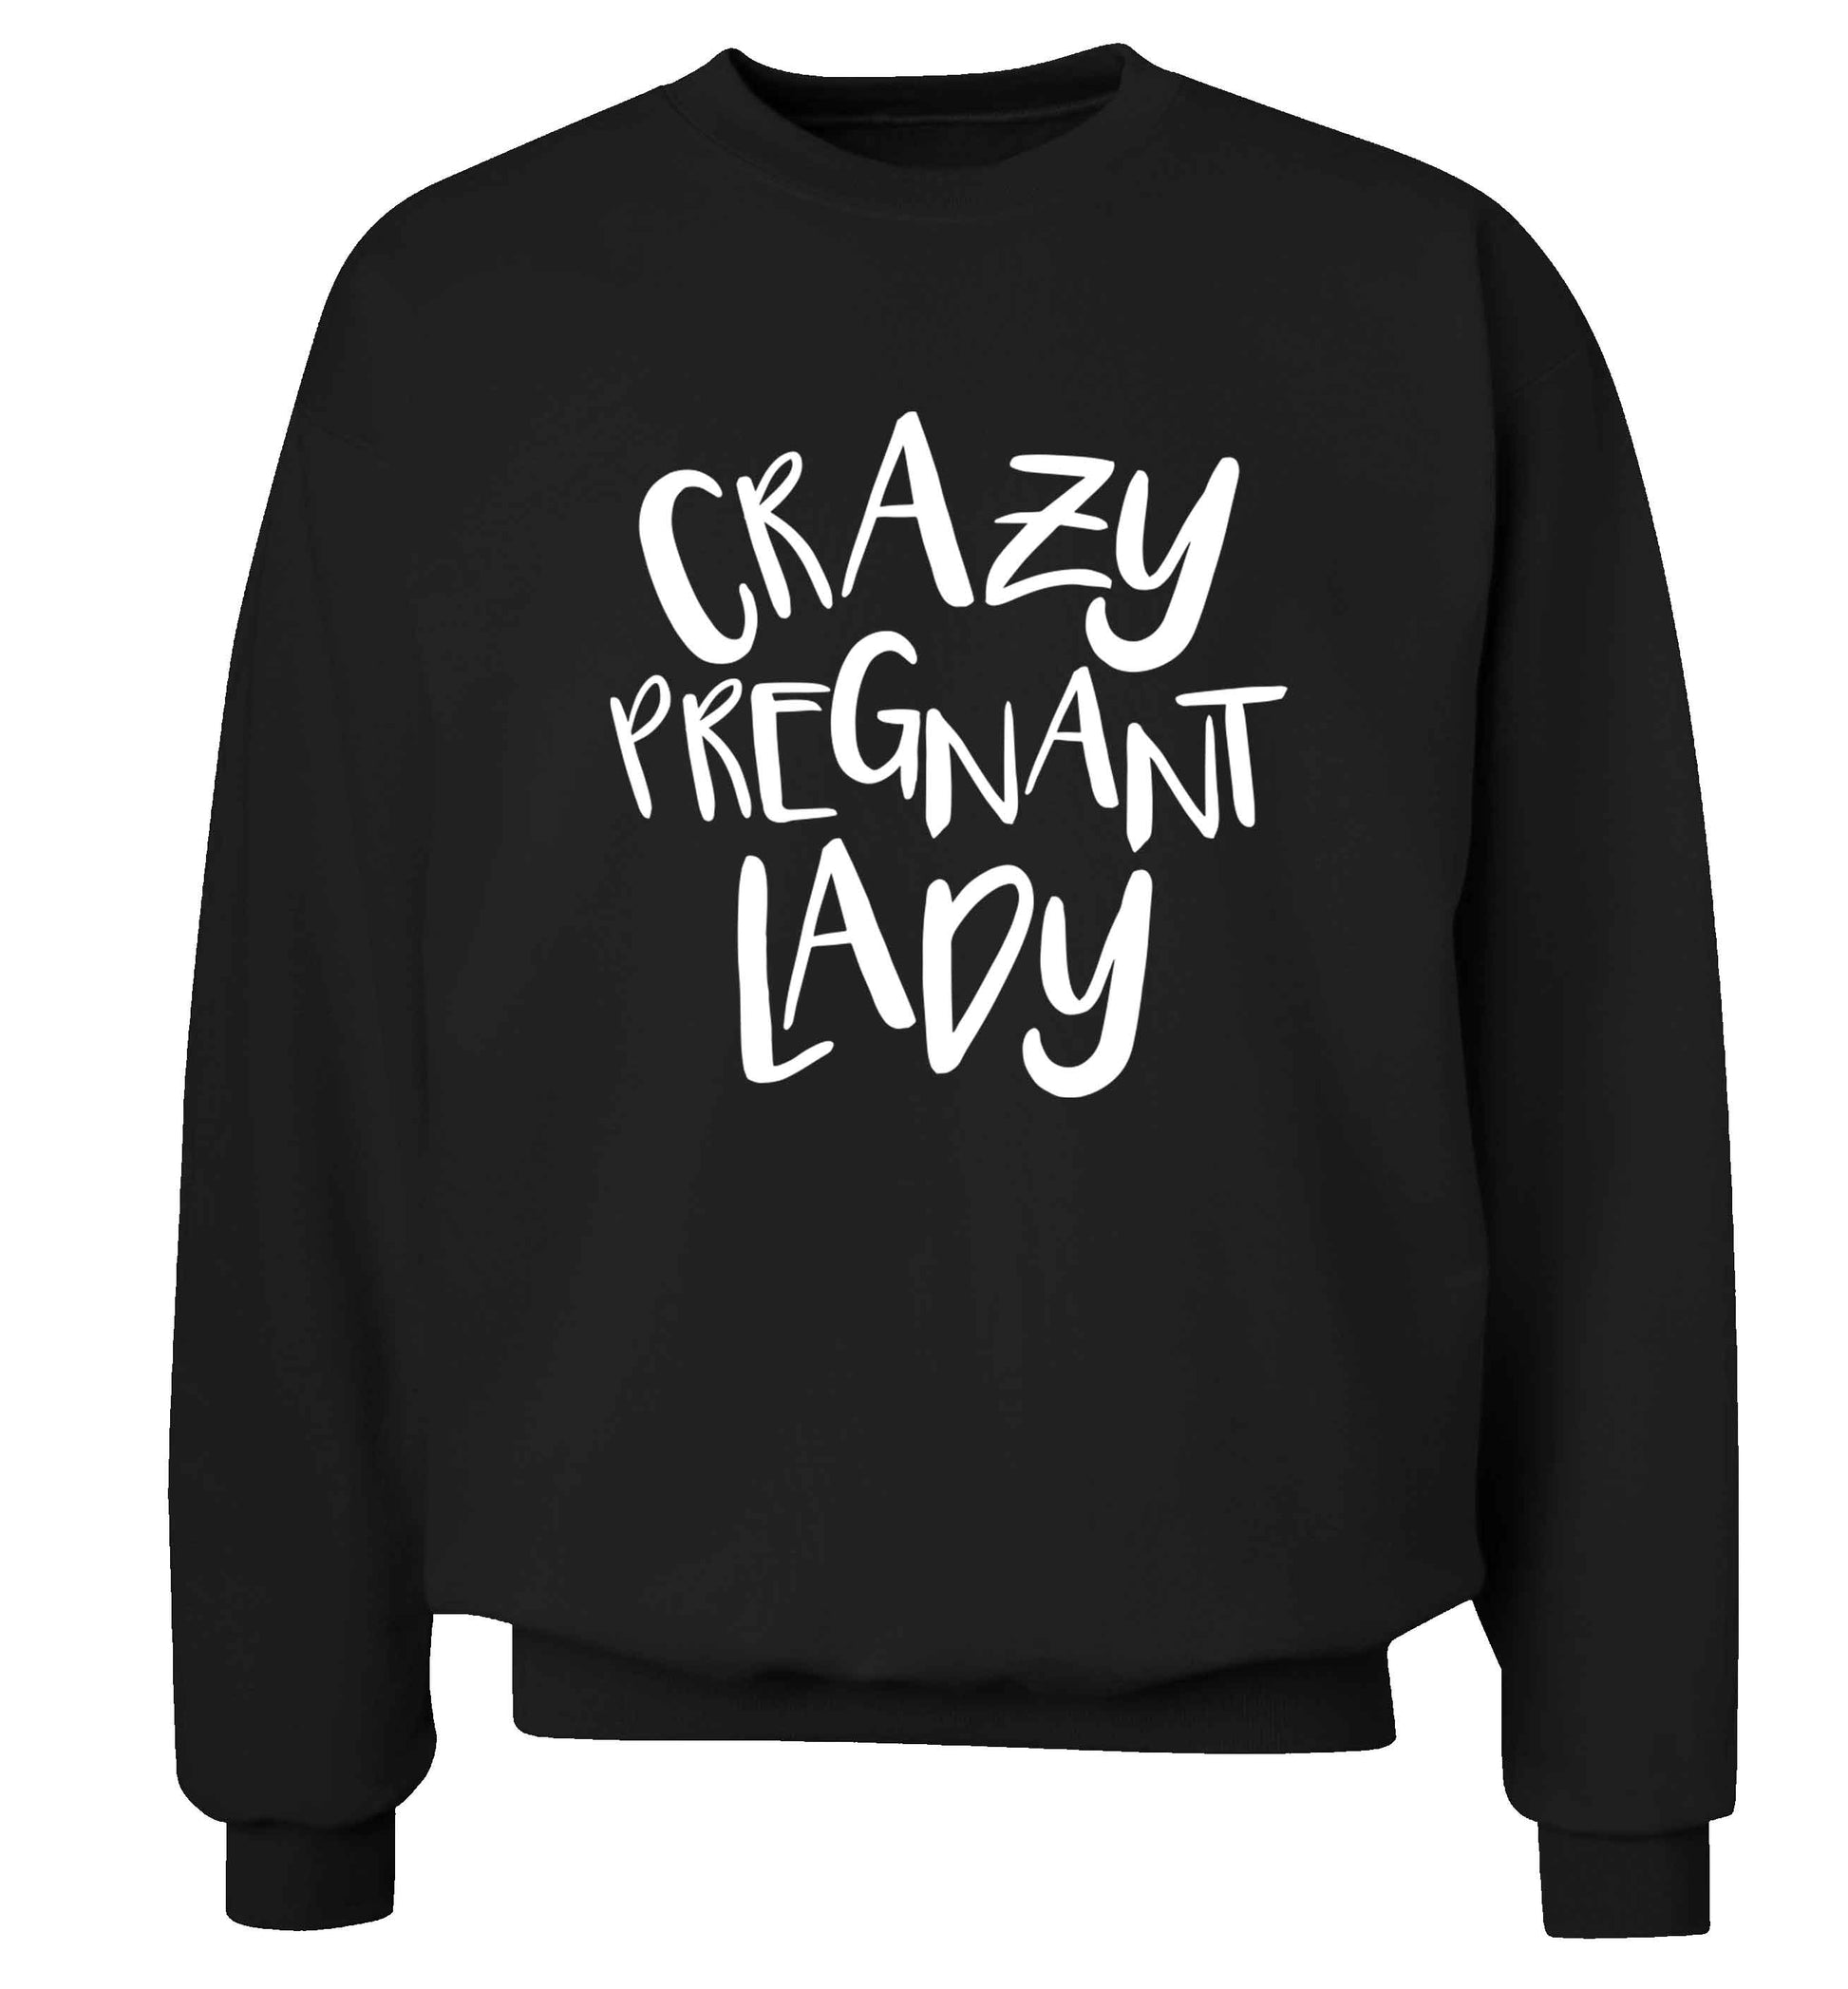 Crazy pregnant lady Adult's unisex black Sweater 2XL